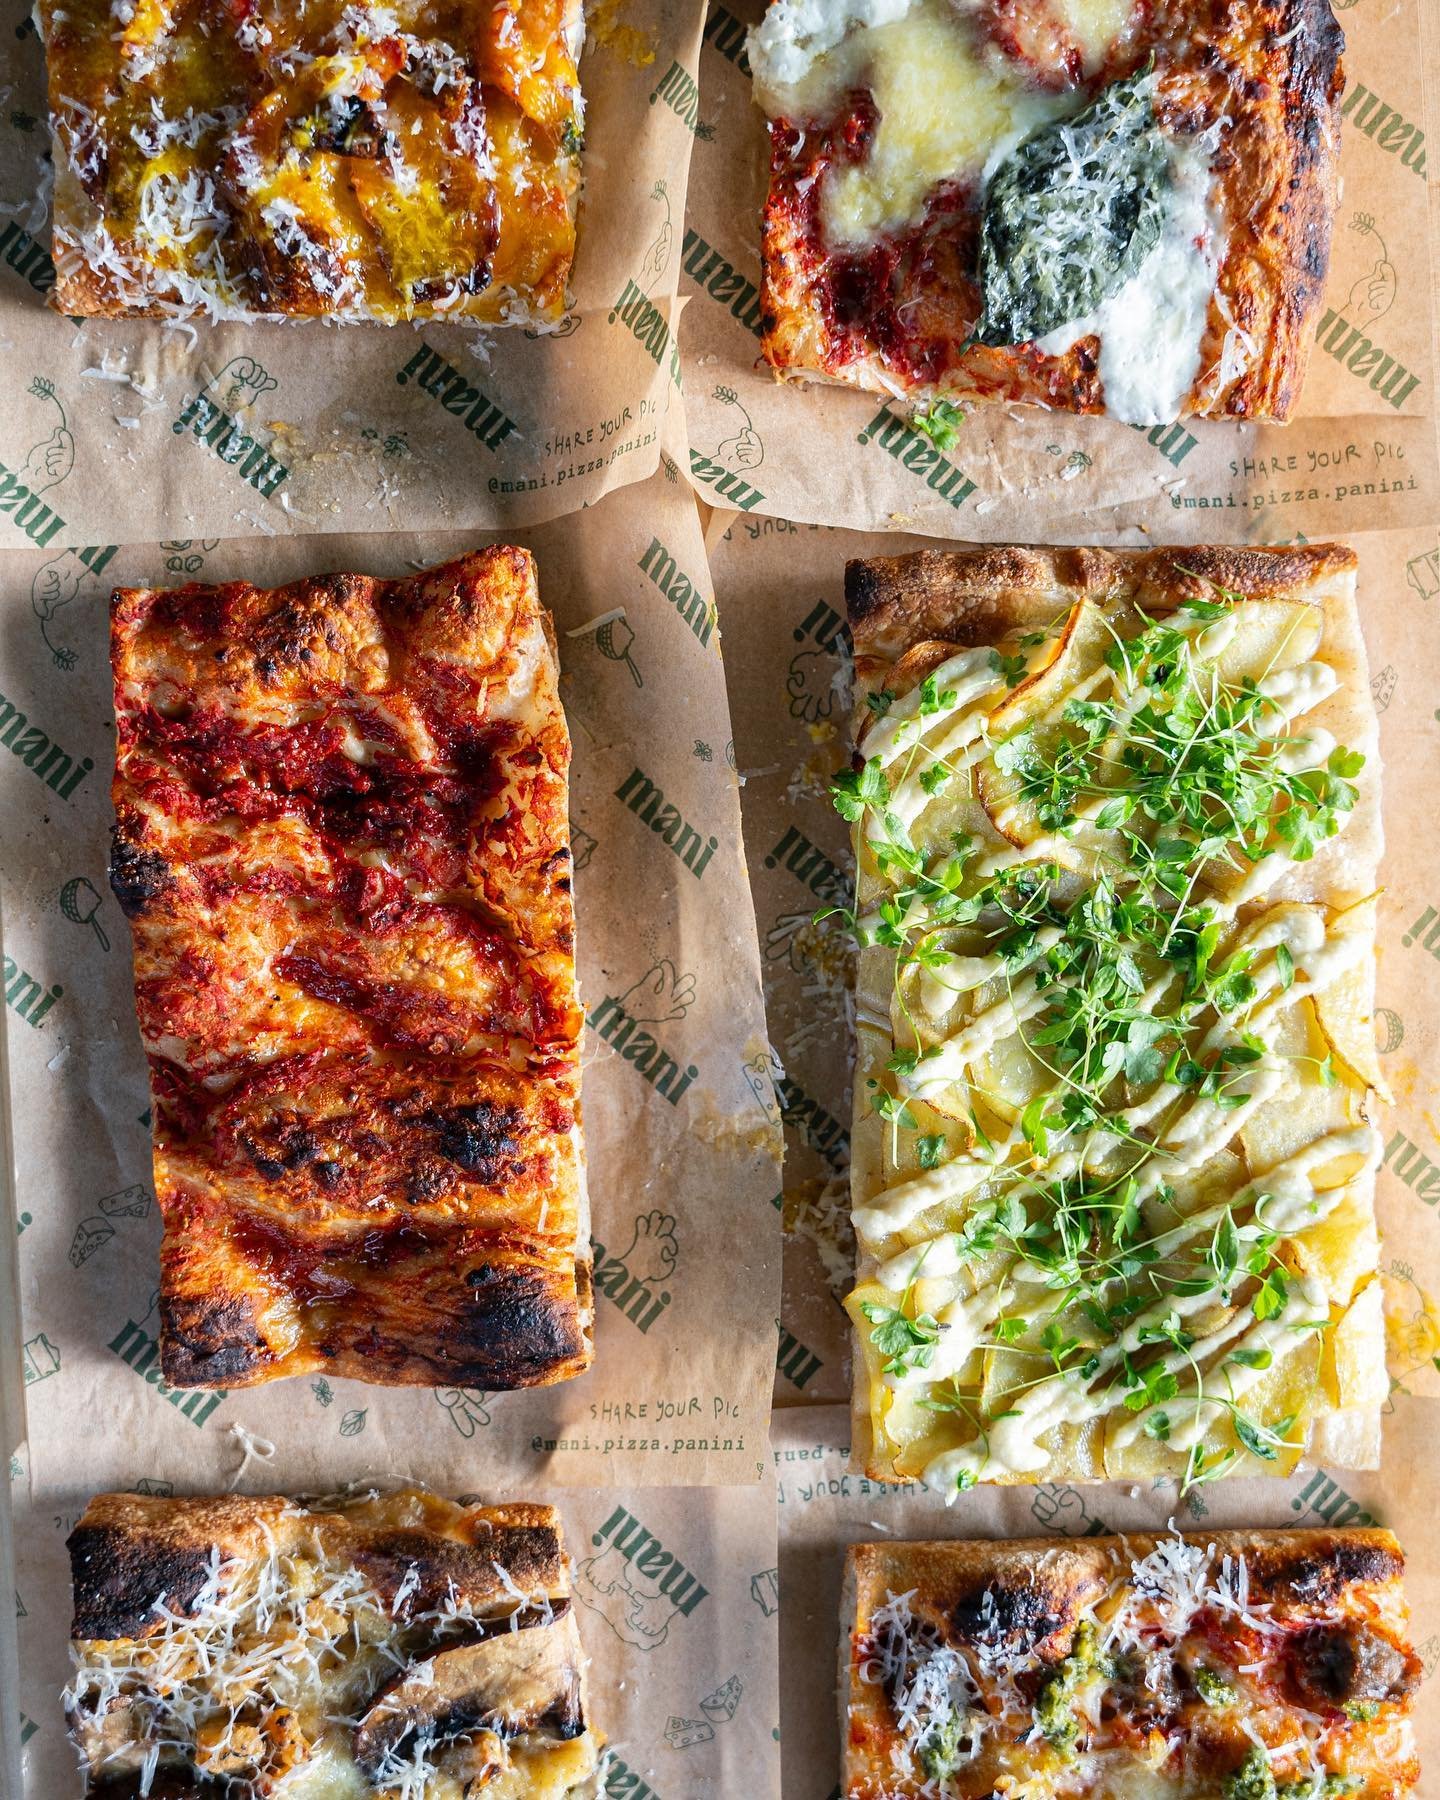 The perfect grab n go slice for your lunch break 💚

#FingersBeforeForks #RomanPizza #PizzaATaglio #DublinRestaurants #DublinPizza #PizzaByTheSlice